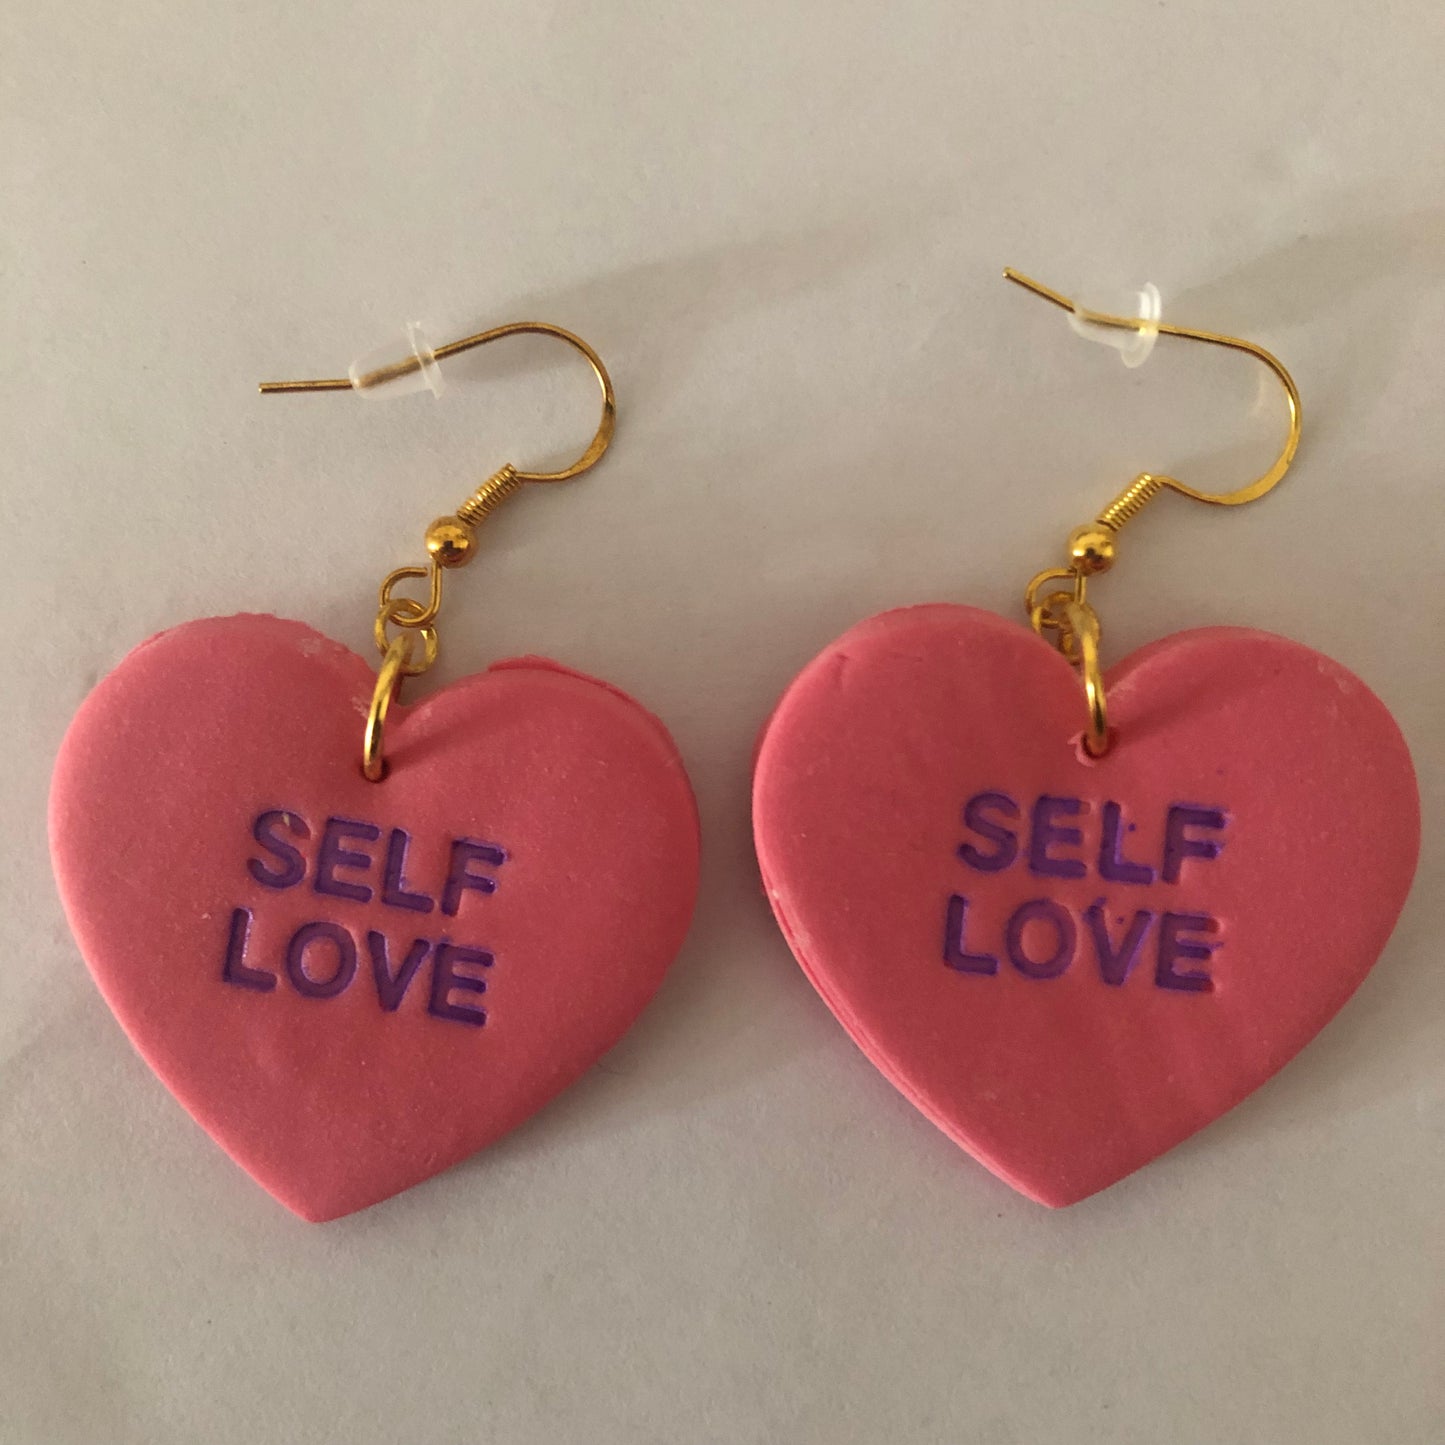 Self Love polymer clay heart-shaped earrings